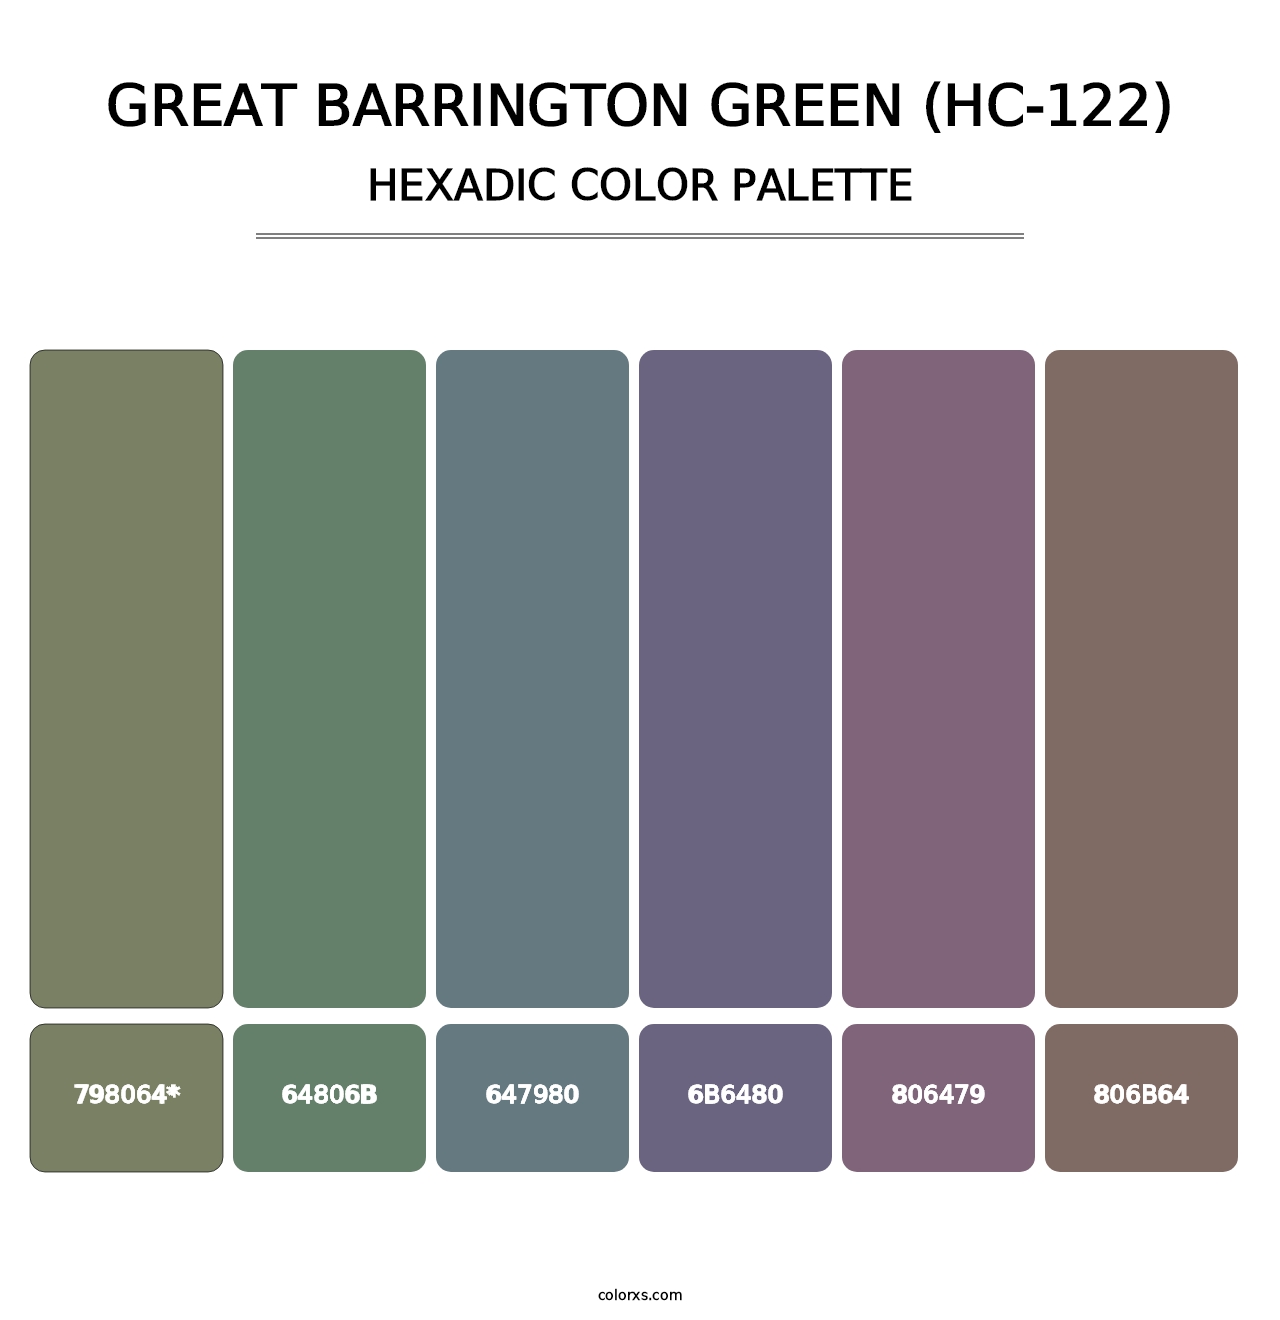 Great Barrington Green (HC-122) - Hexadic Color Palette